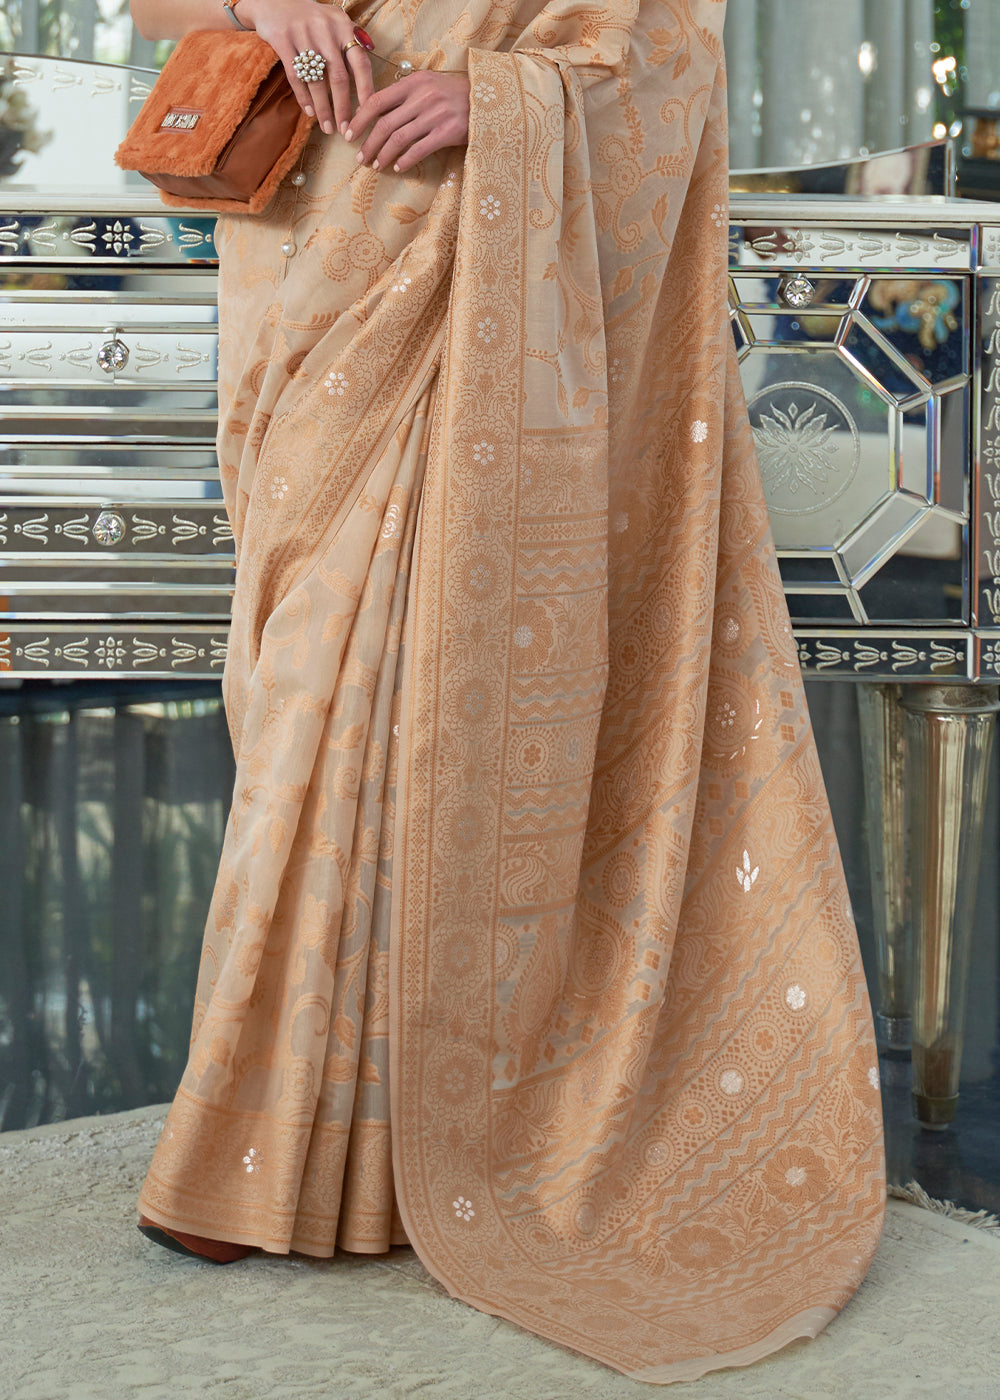 Shades Of Brown Lucknowi Chikankari Weaving Silk Saree - Colorful Saree